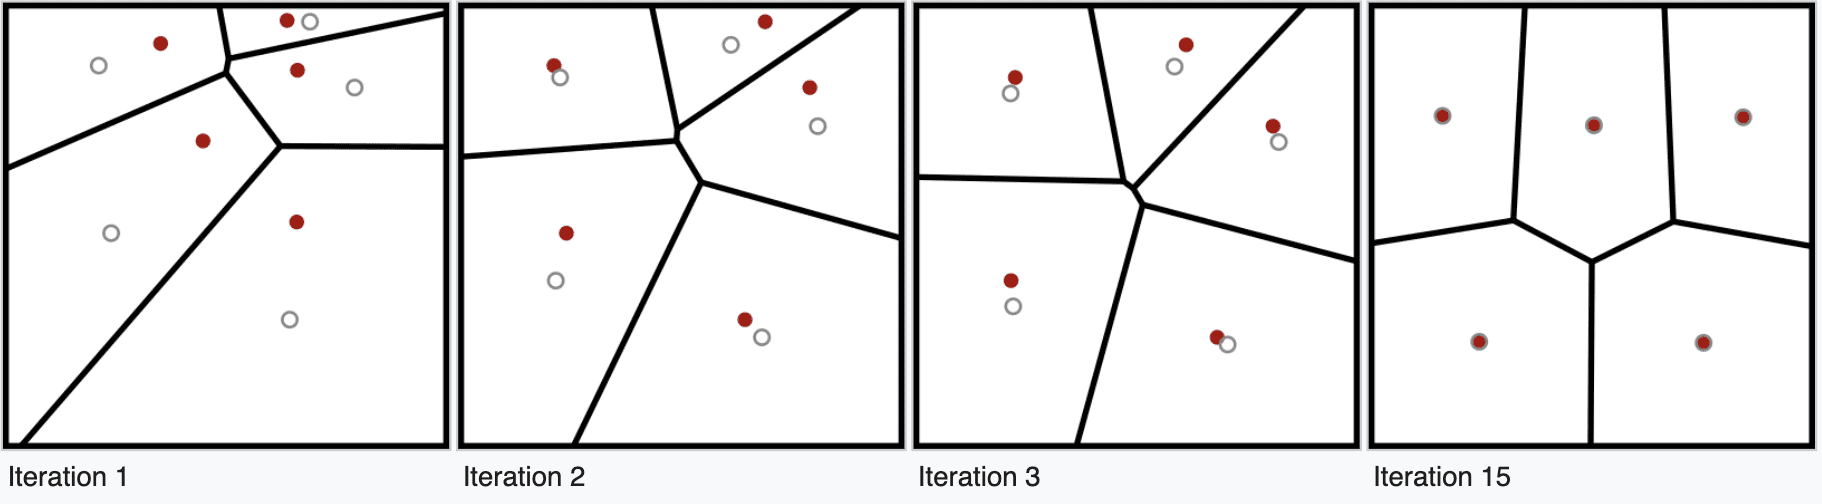 A Quick Overview of Voronoi Diagrams